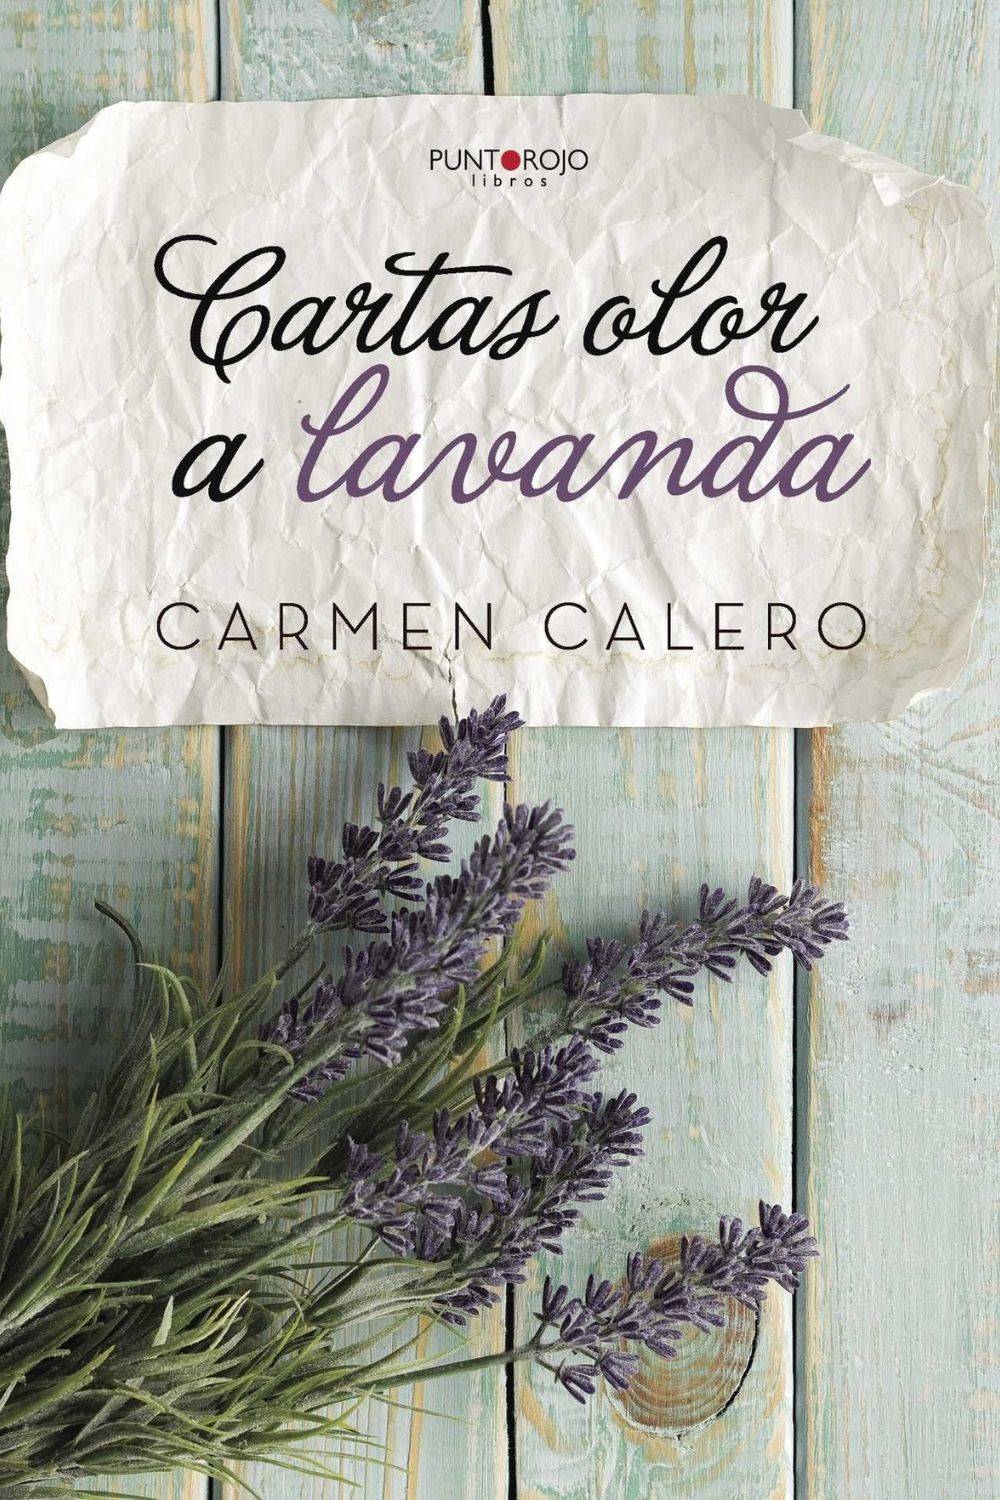 ‘Cartas olor a lavanda’ de Carmen Calero